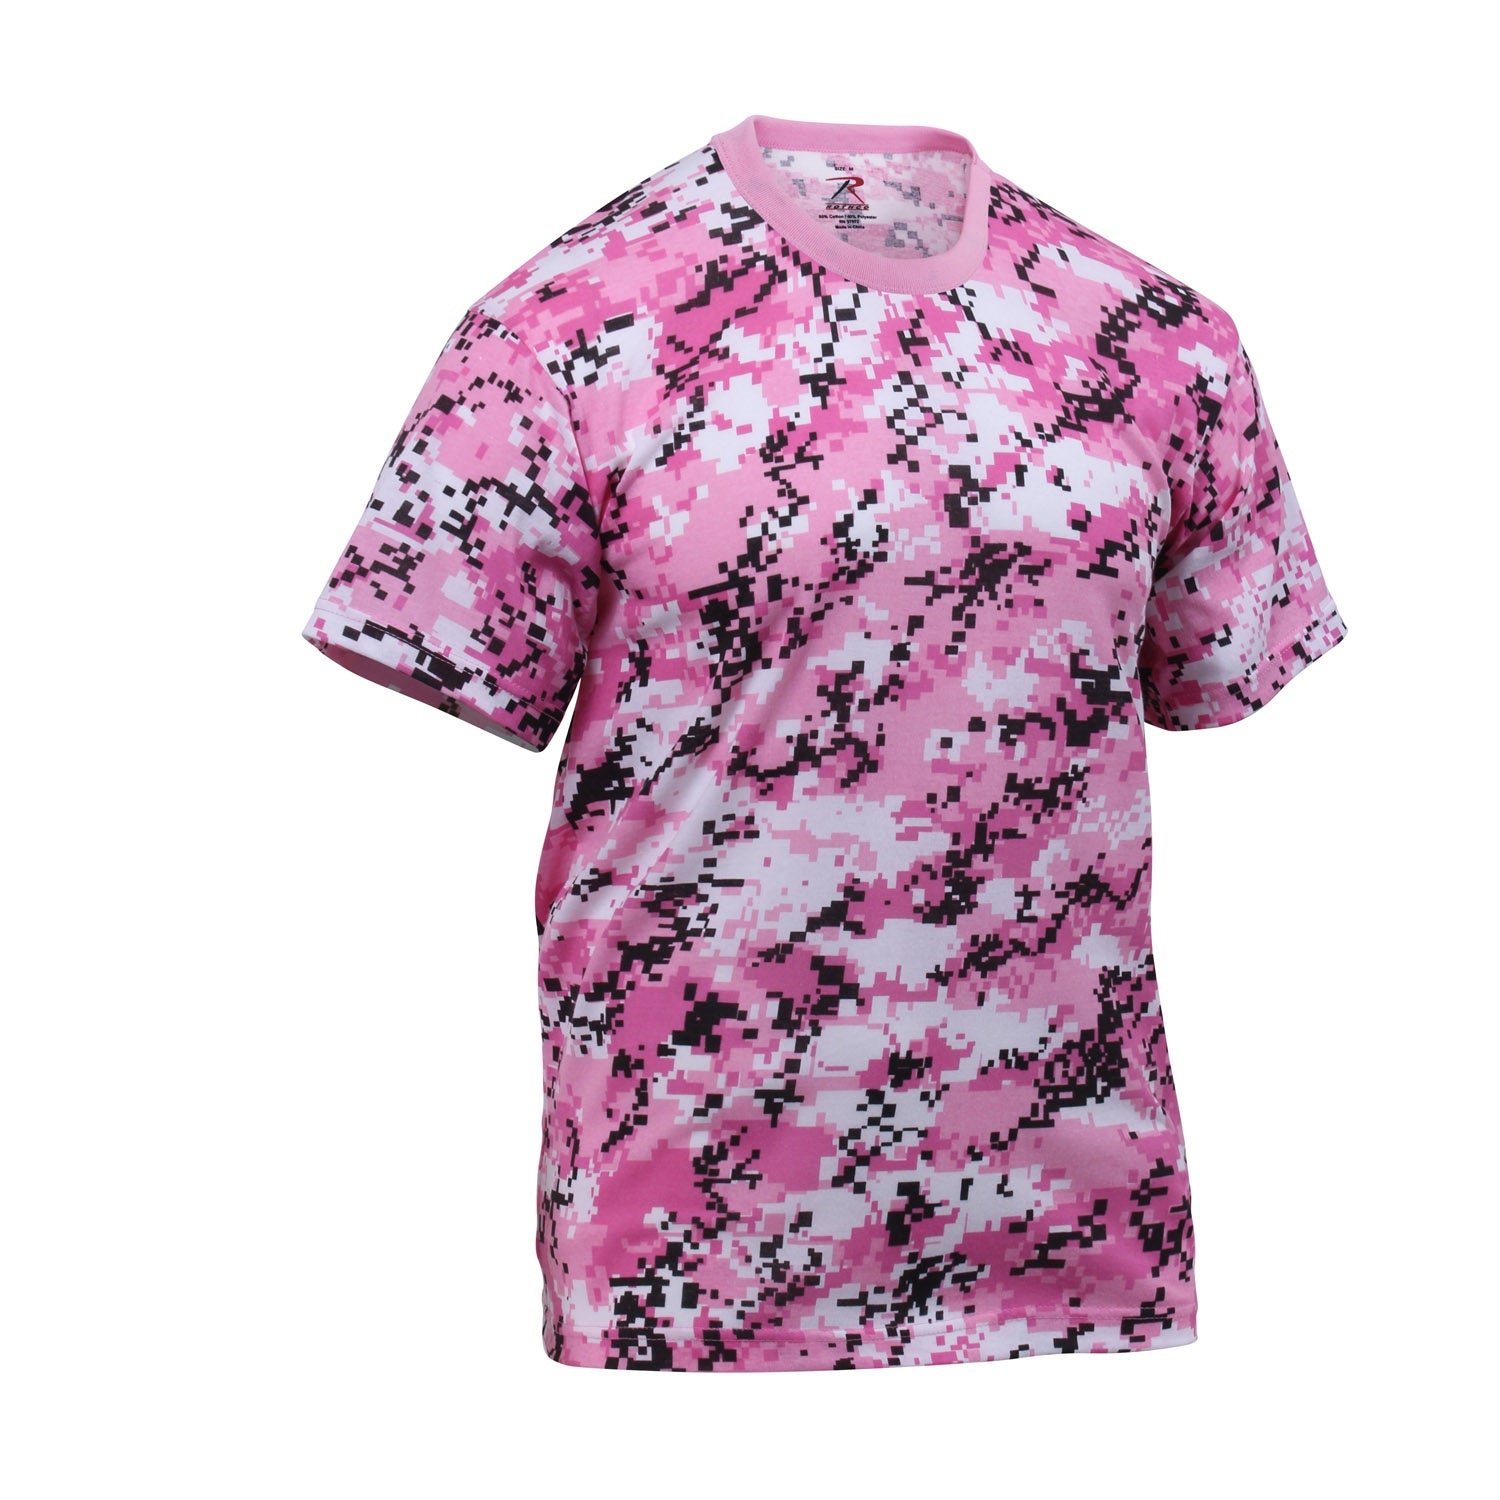 Rothco Digital Camo T-Shirt Pink Digital Camo